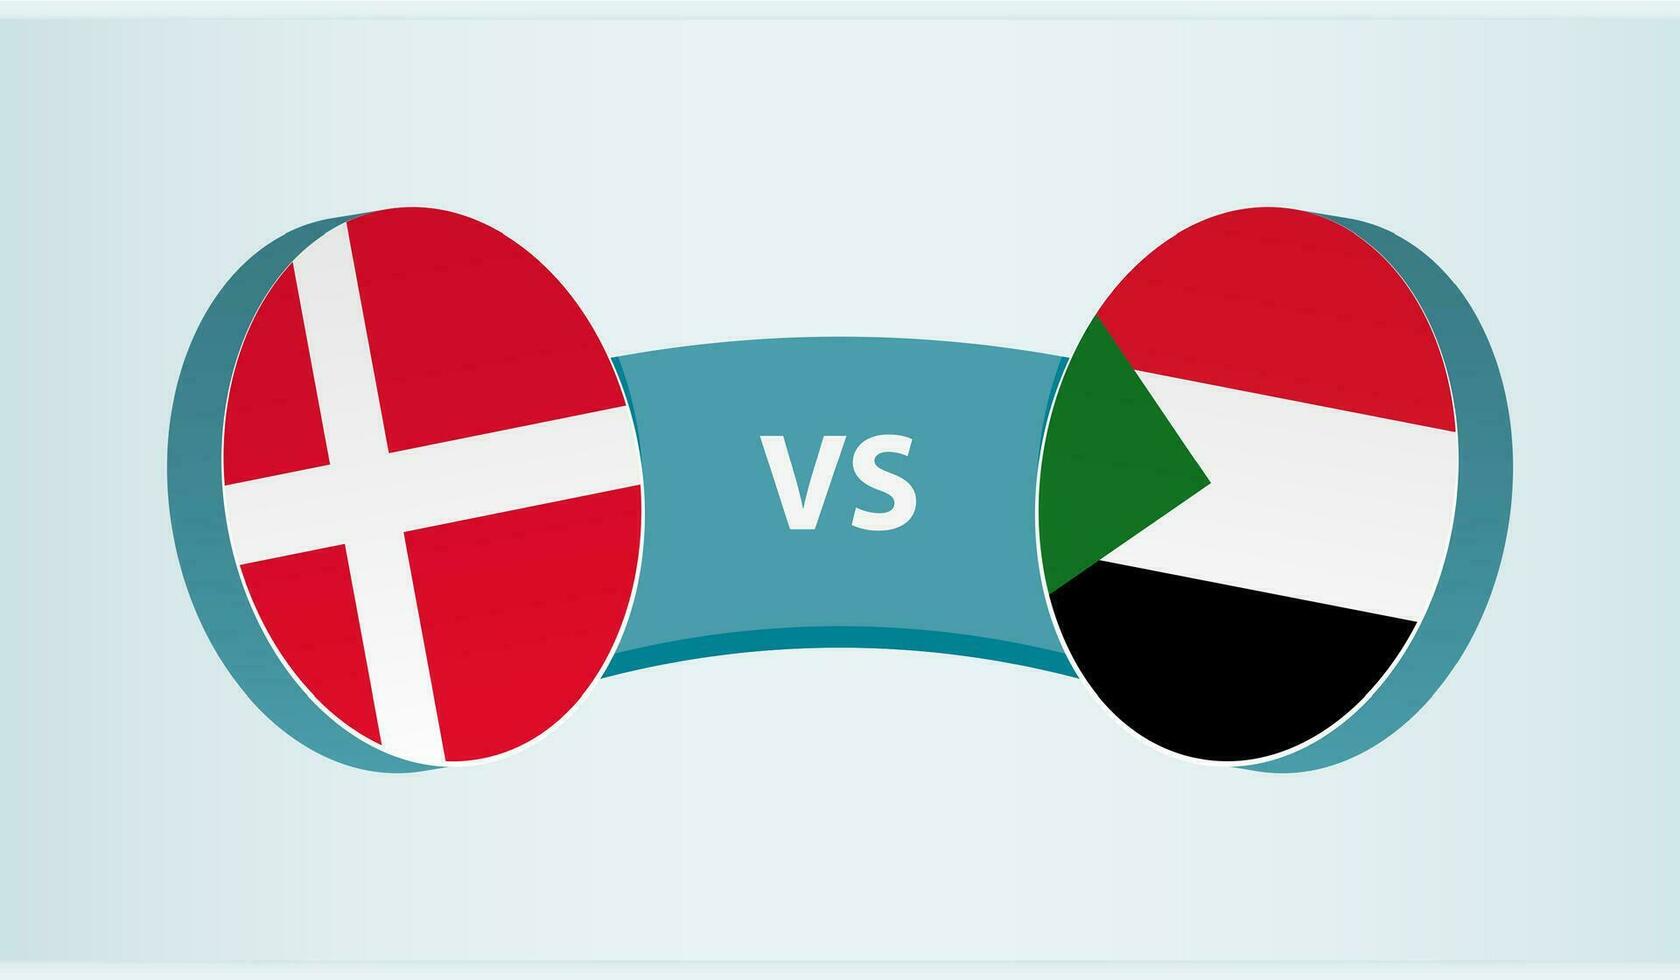 Denmark versus Sudan, team sports competition concept. vector